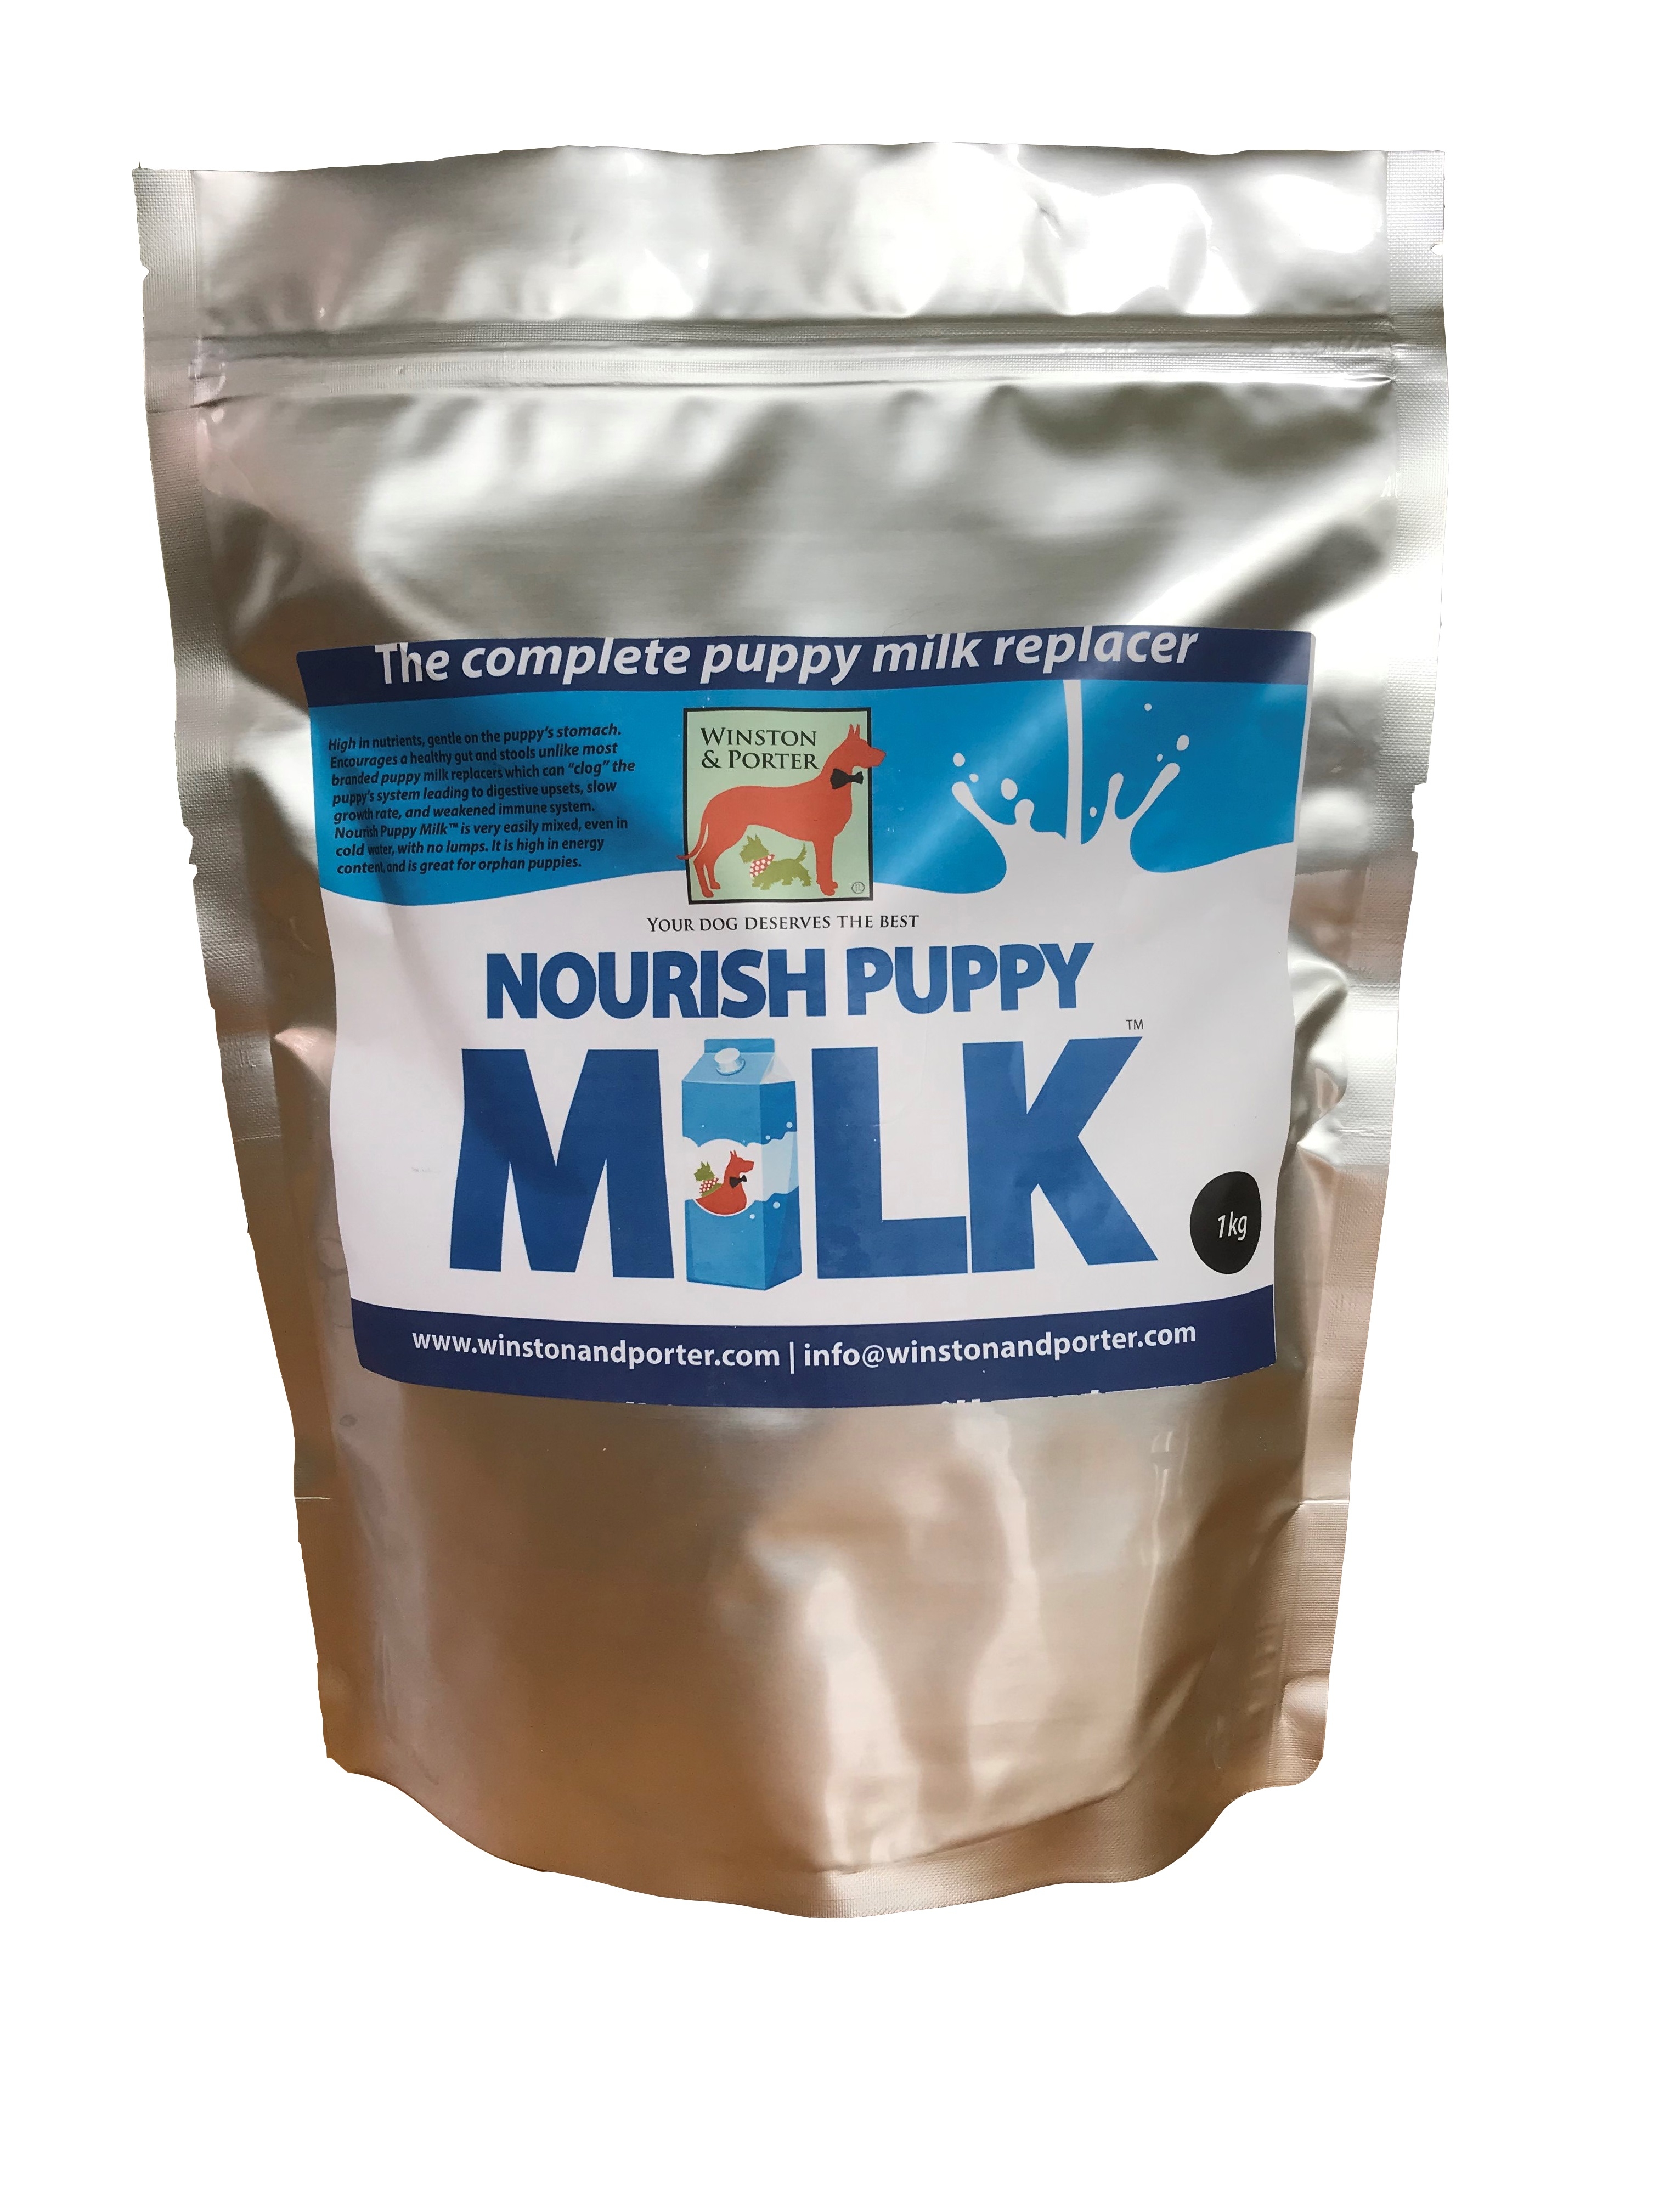 The Complete Puppy Milk Replacer Powder Form – Nutrient Rich – 200g / 500g / 1kg / 2.5kg / 4kg – Winston & Porter